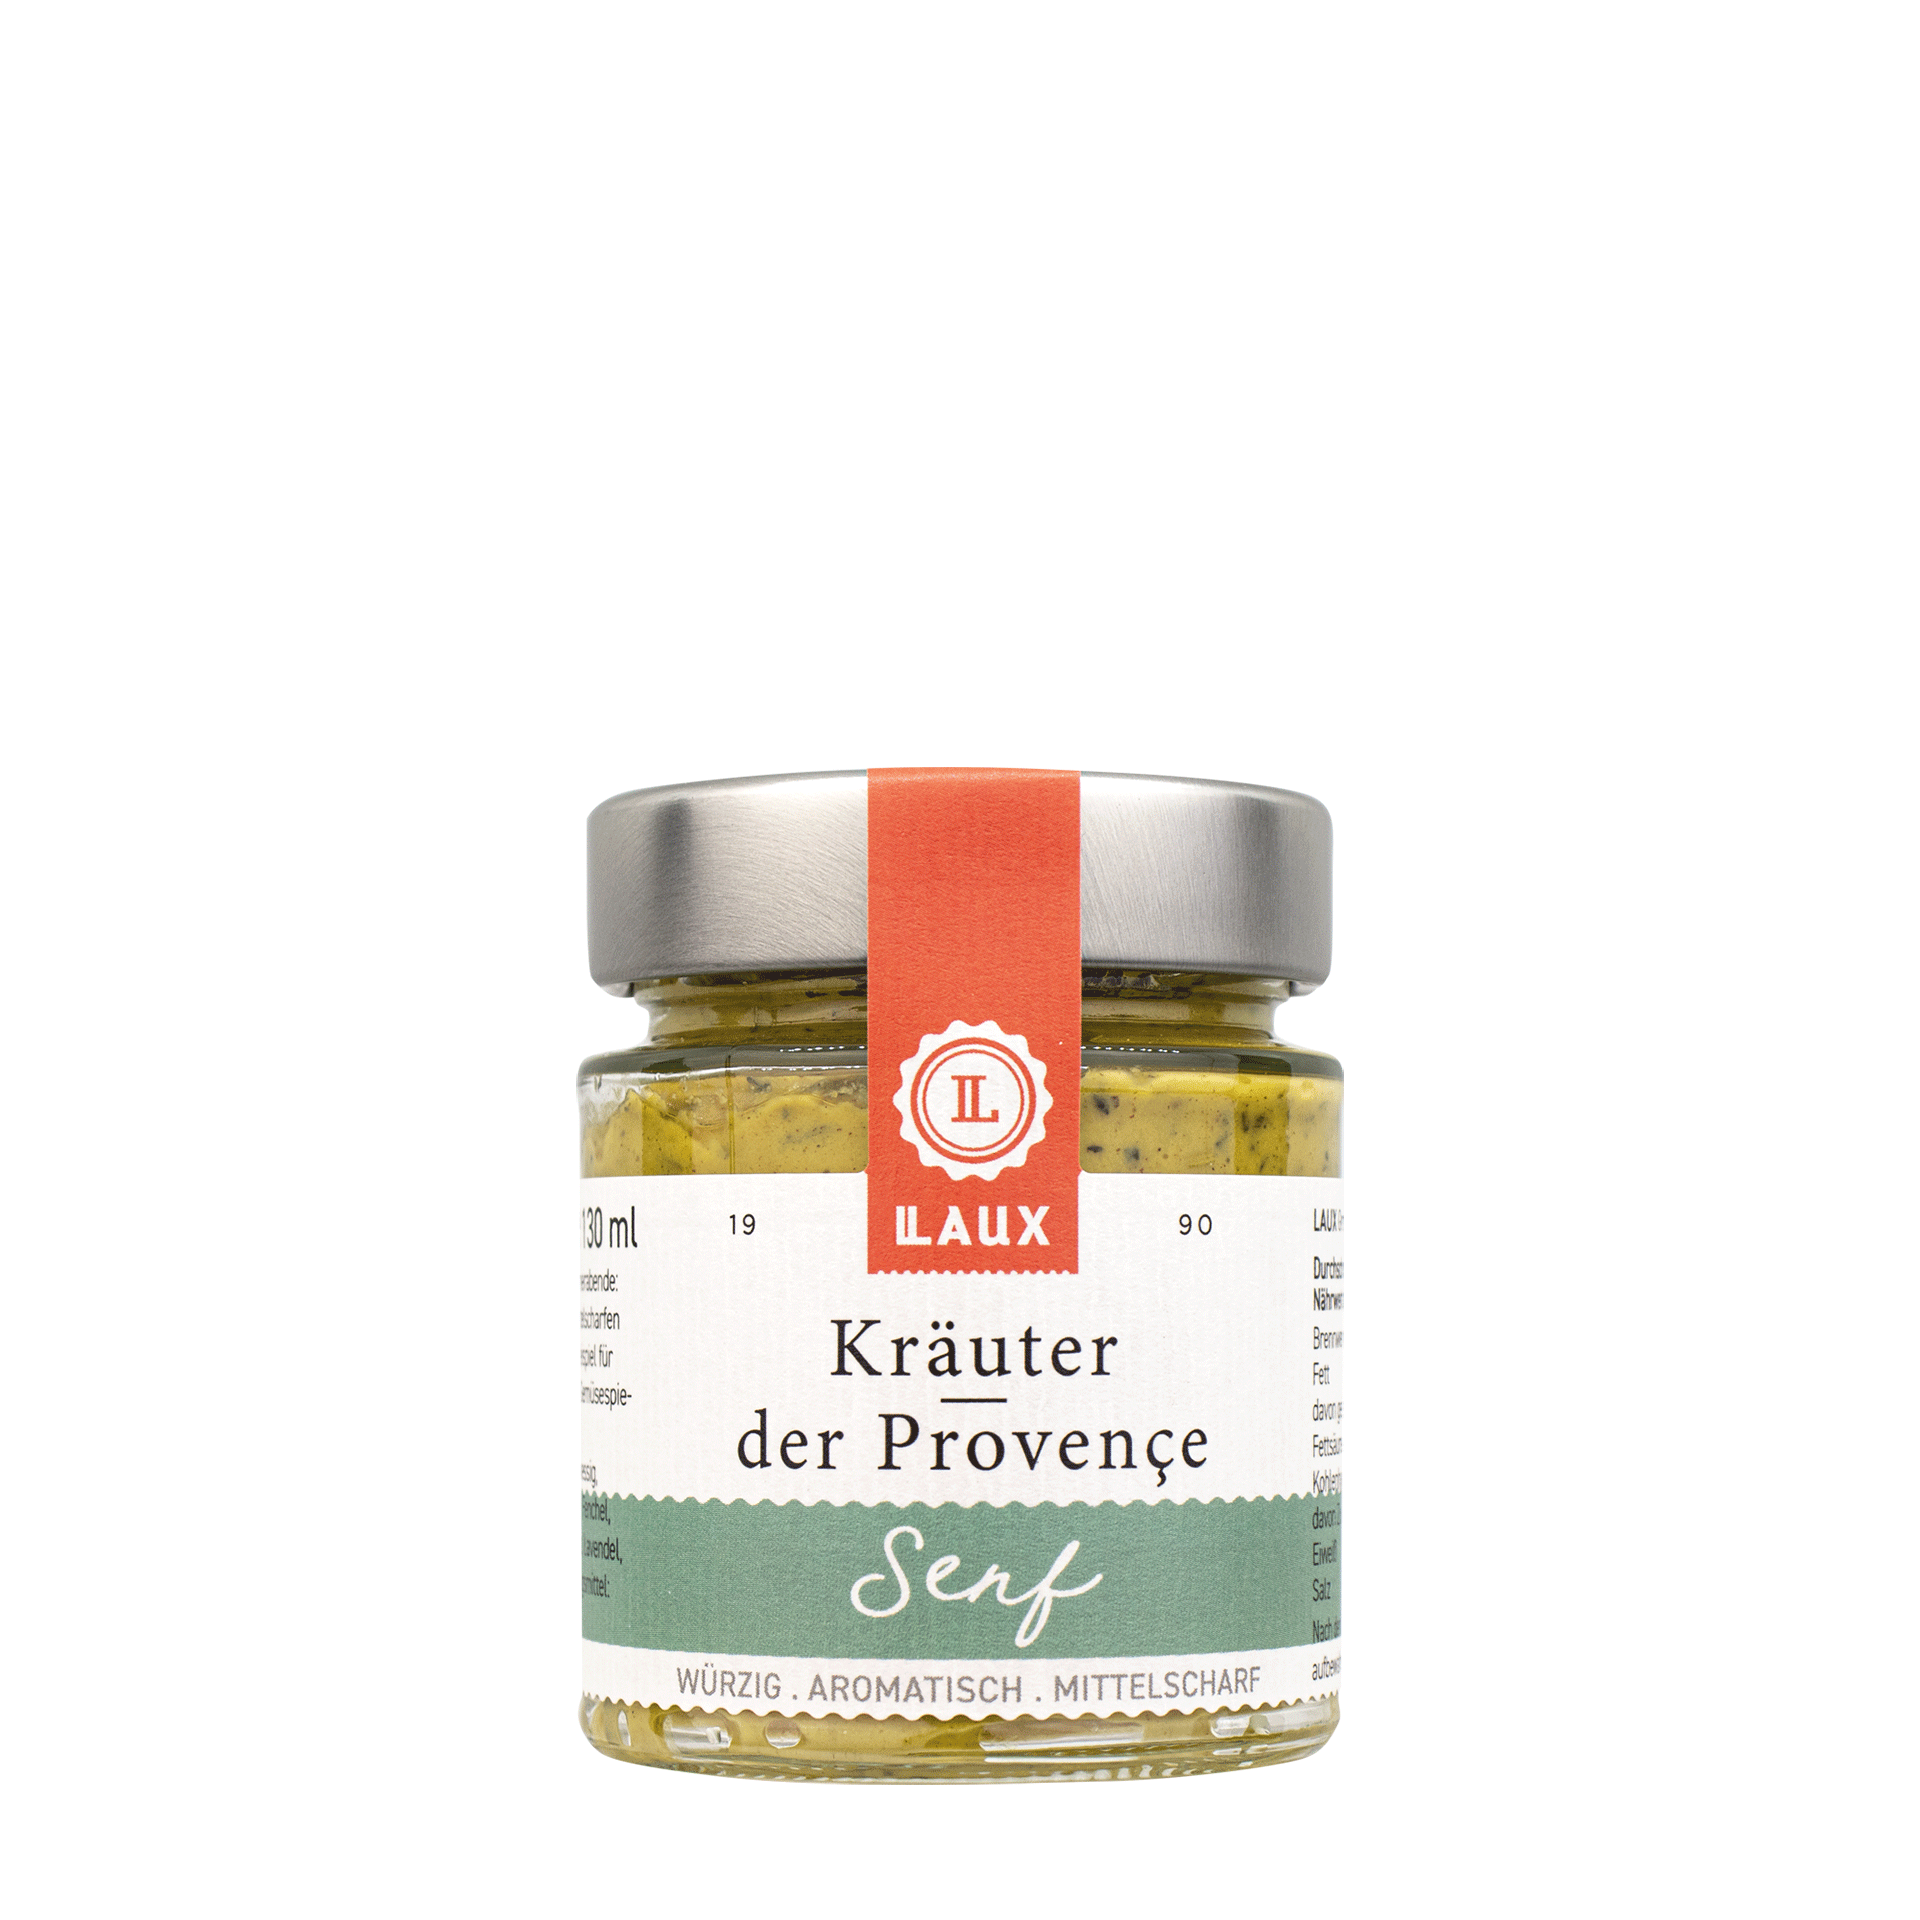 Kräuter der Provence Senf im Glas